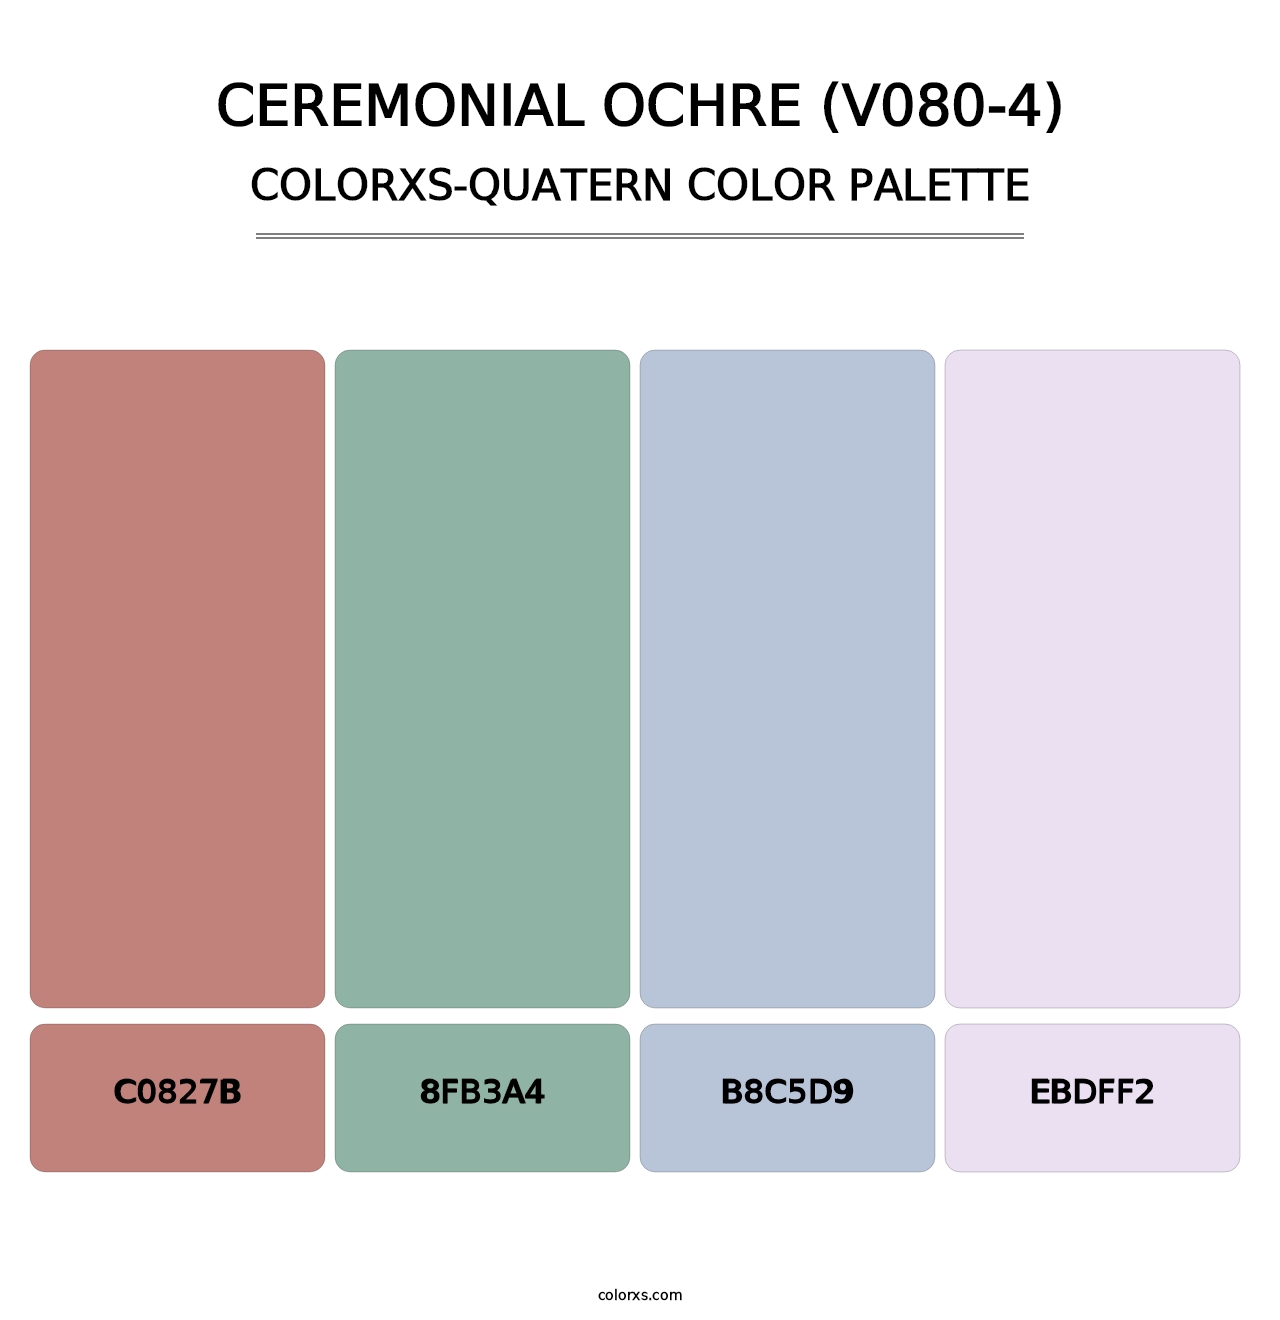 Ceremonial Ochre (V080-4) - Colorxs Quatern Palette